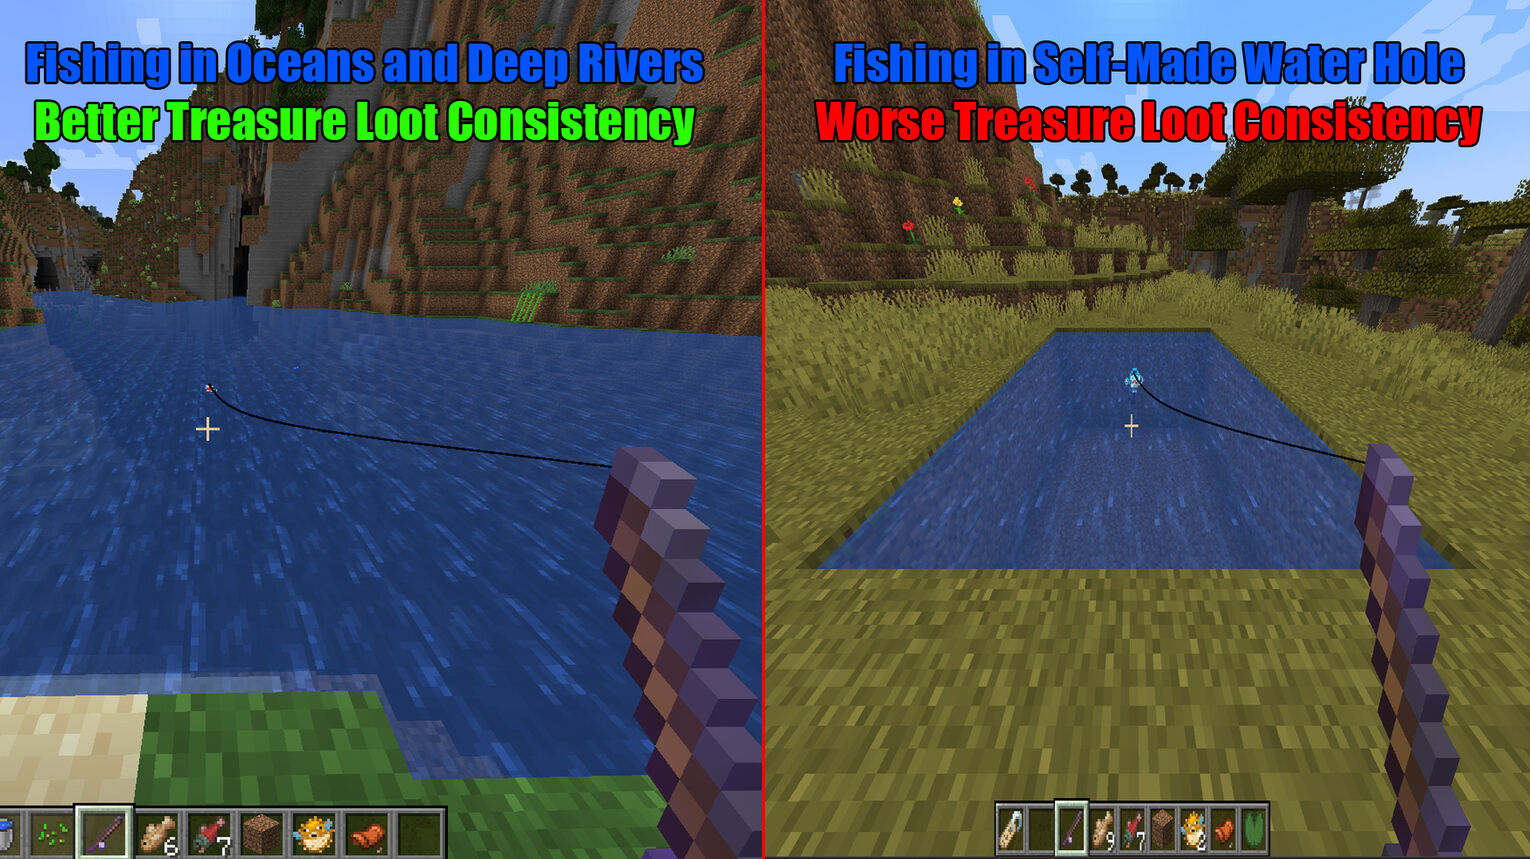 Minecraft Fishing Location Treasure Consistency Ocean River Water Hole